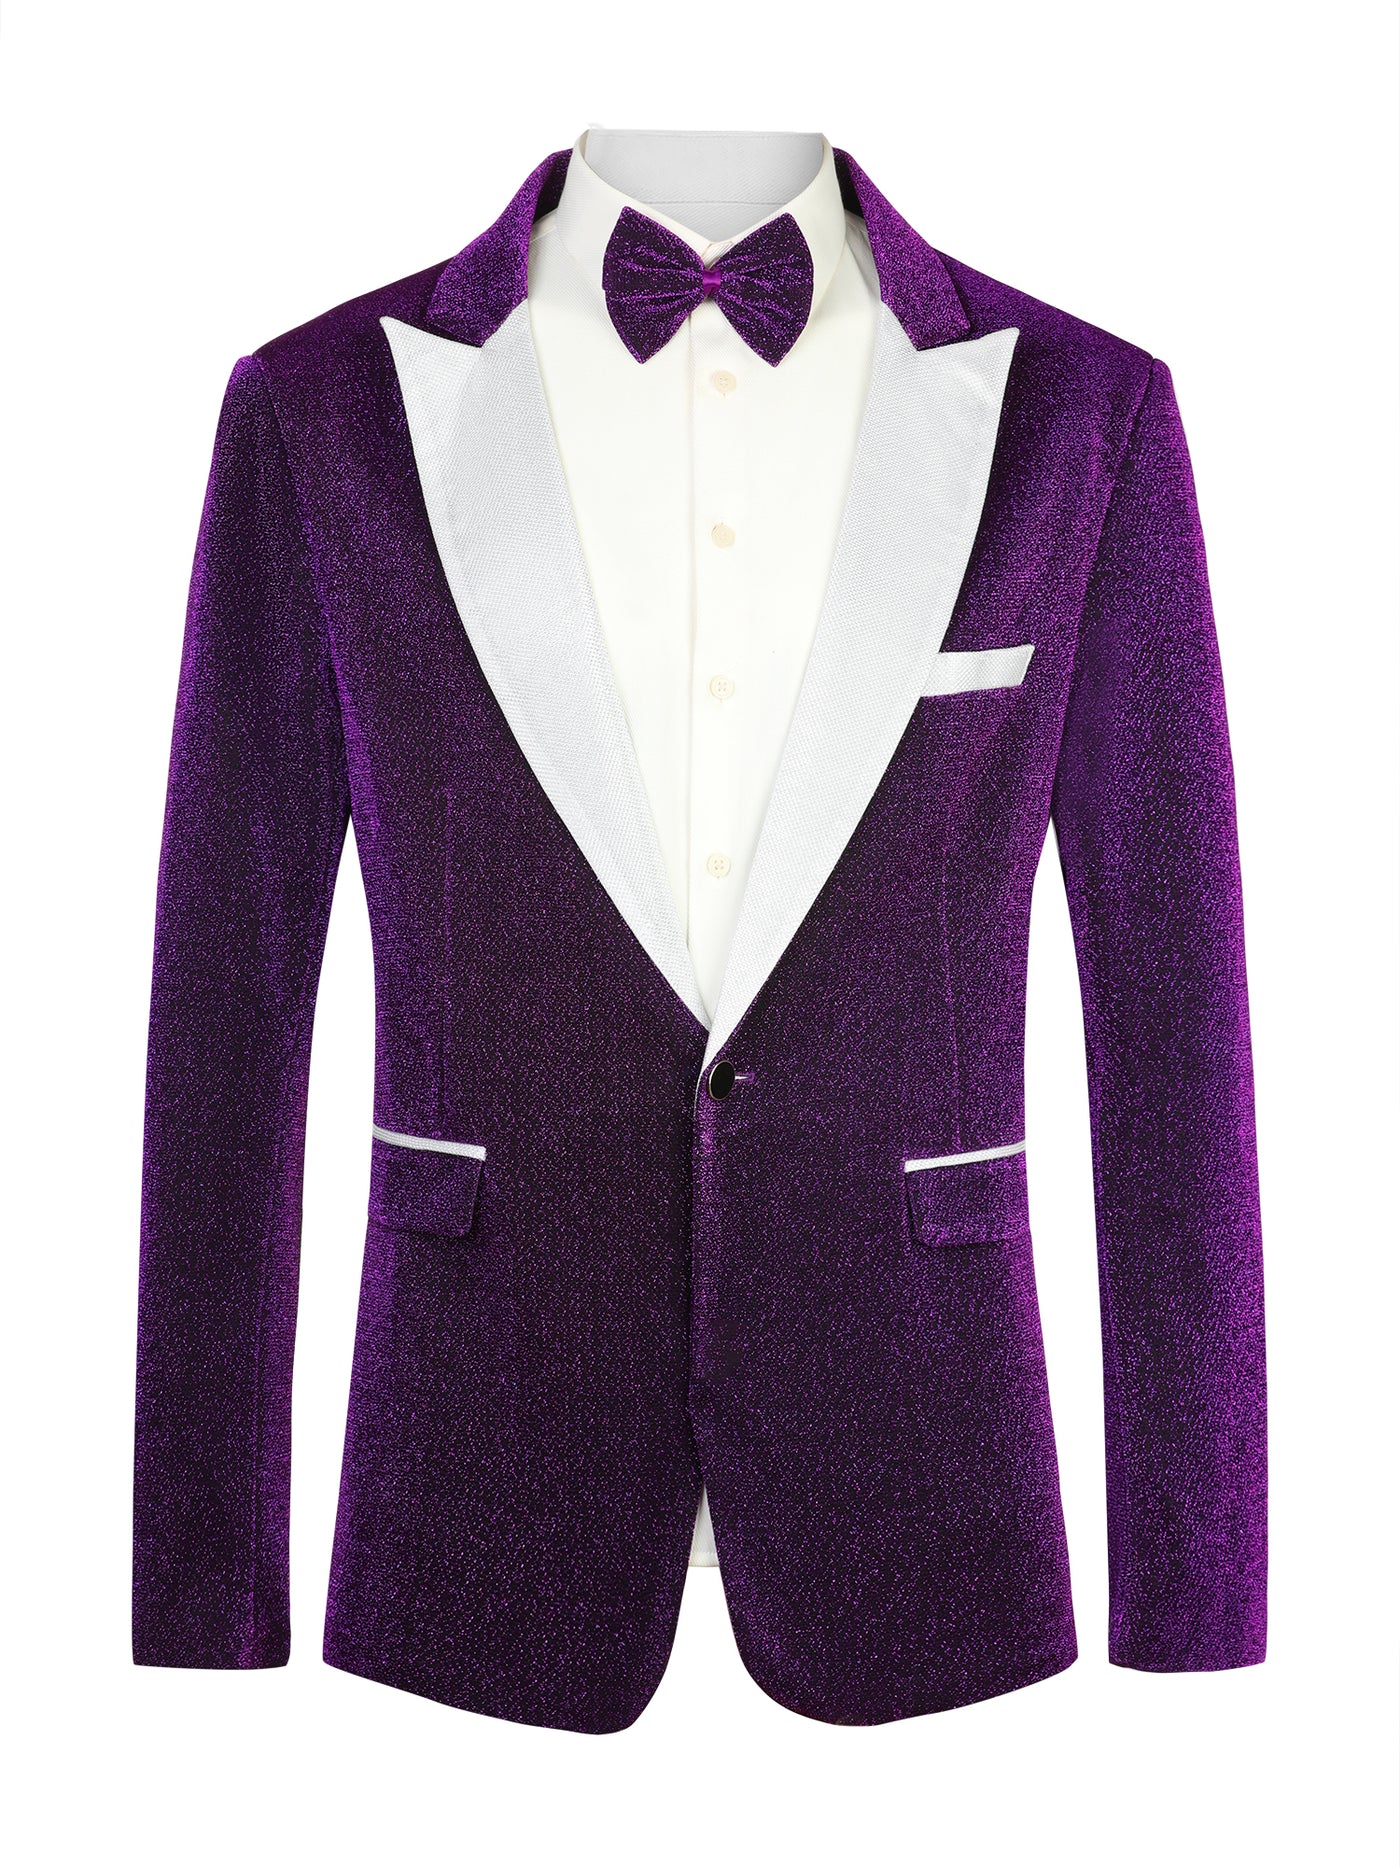 Bublédon Prom Shiny Blazer for Men's Peak Lapel One Button Wedding Sport Coats with Bow-tie